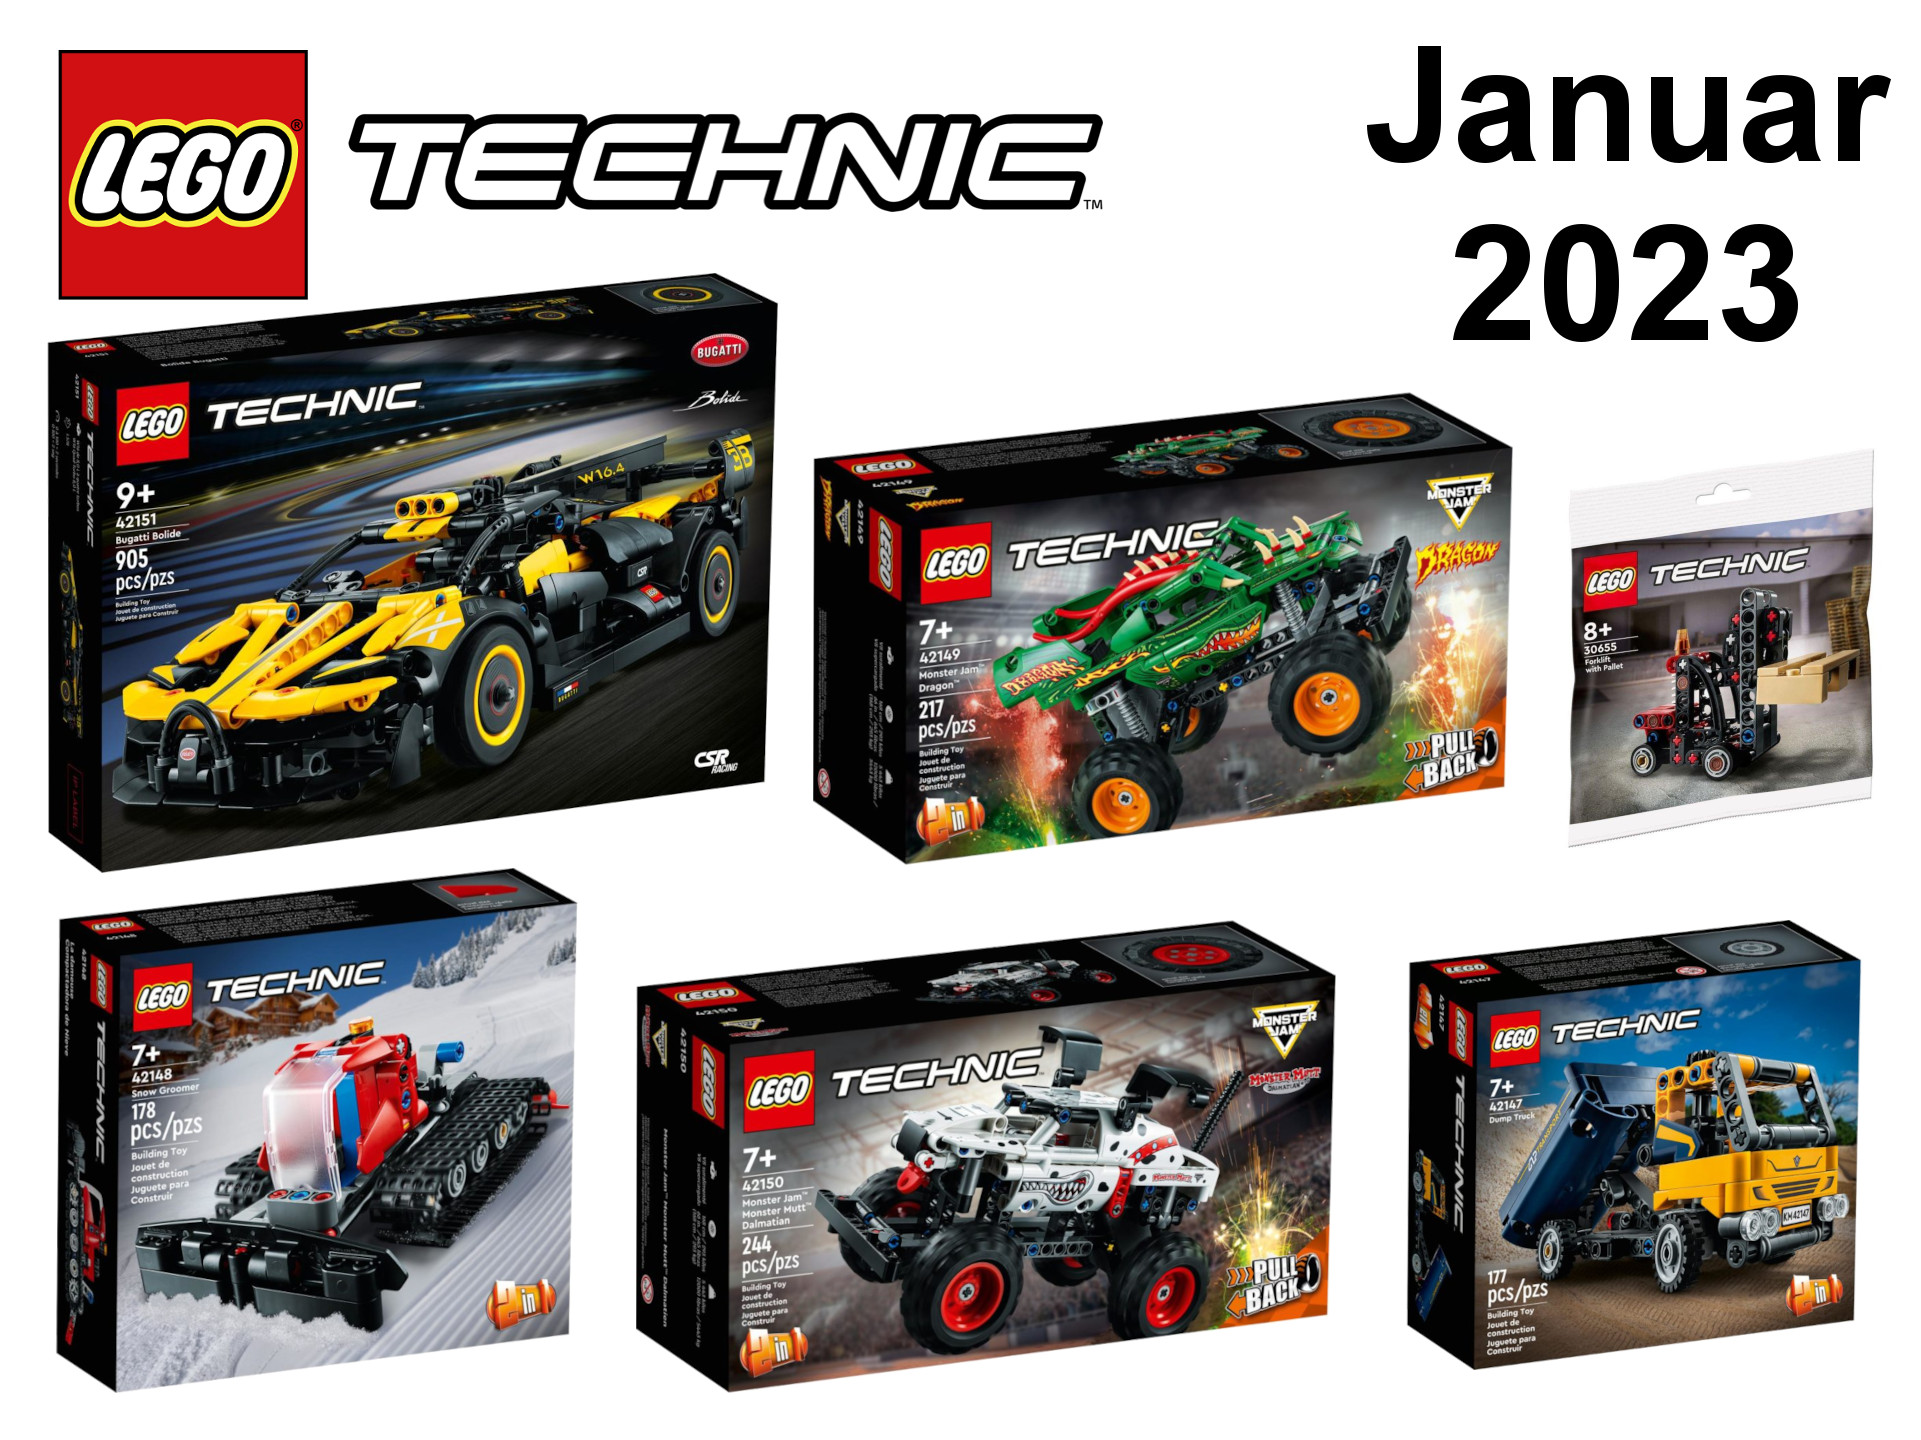 LEGO Technic Neuheiten Januar 2023 - Brickzeit